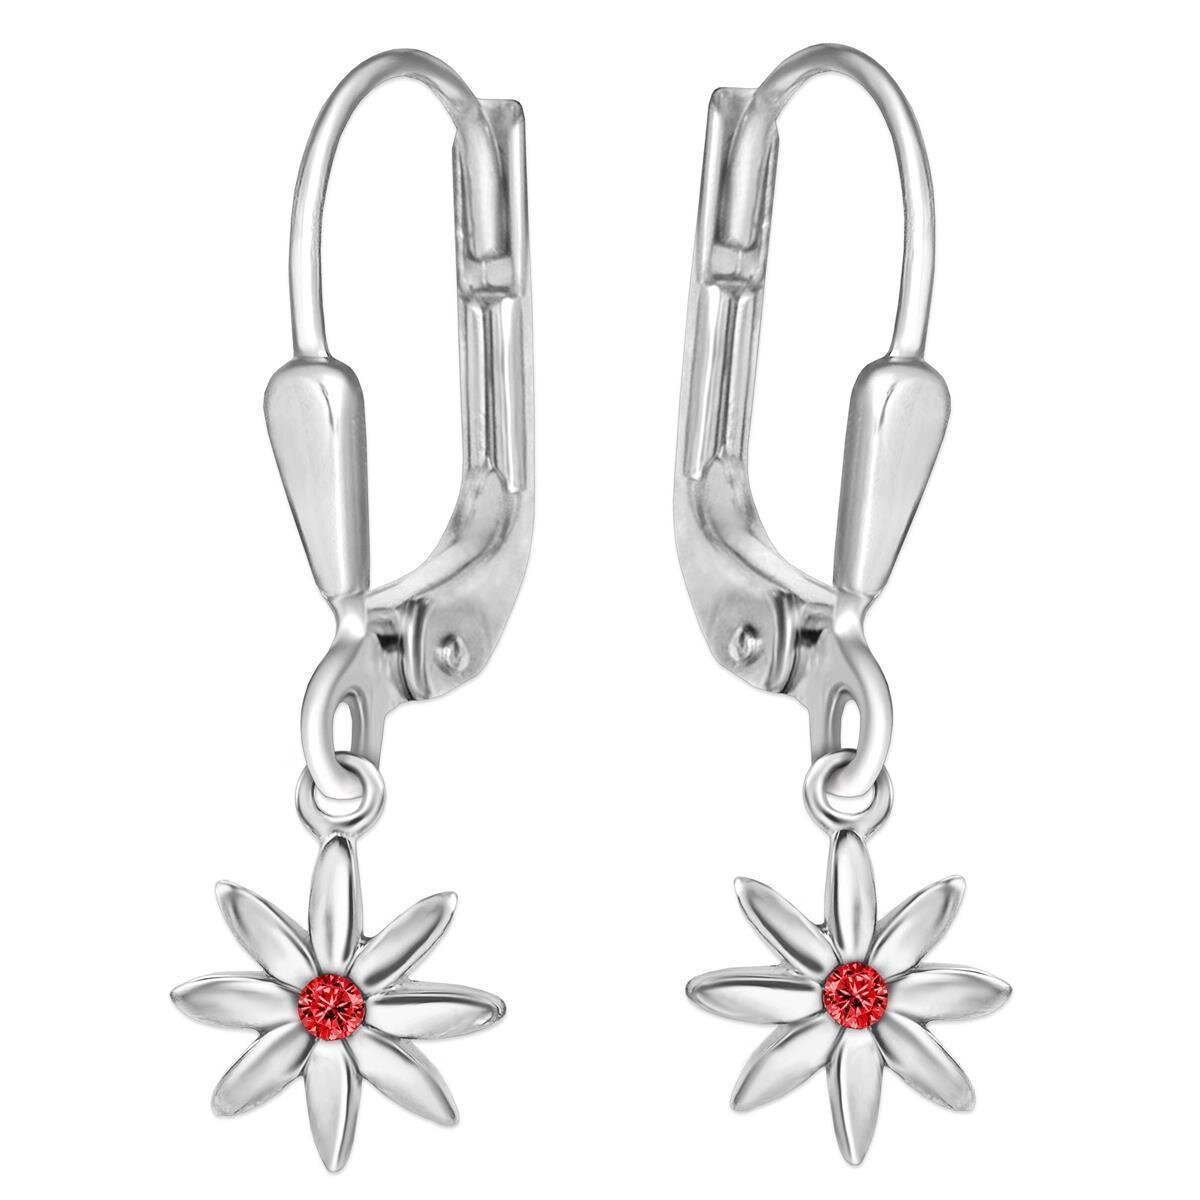 Silberne Ohrringe 22 mm Blume Zirkonia mittig rot Echt Silber 925